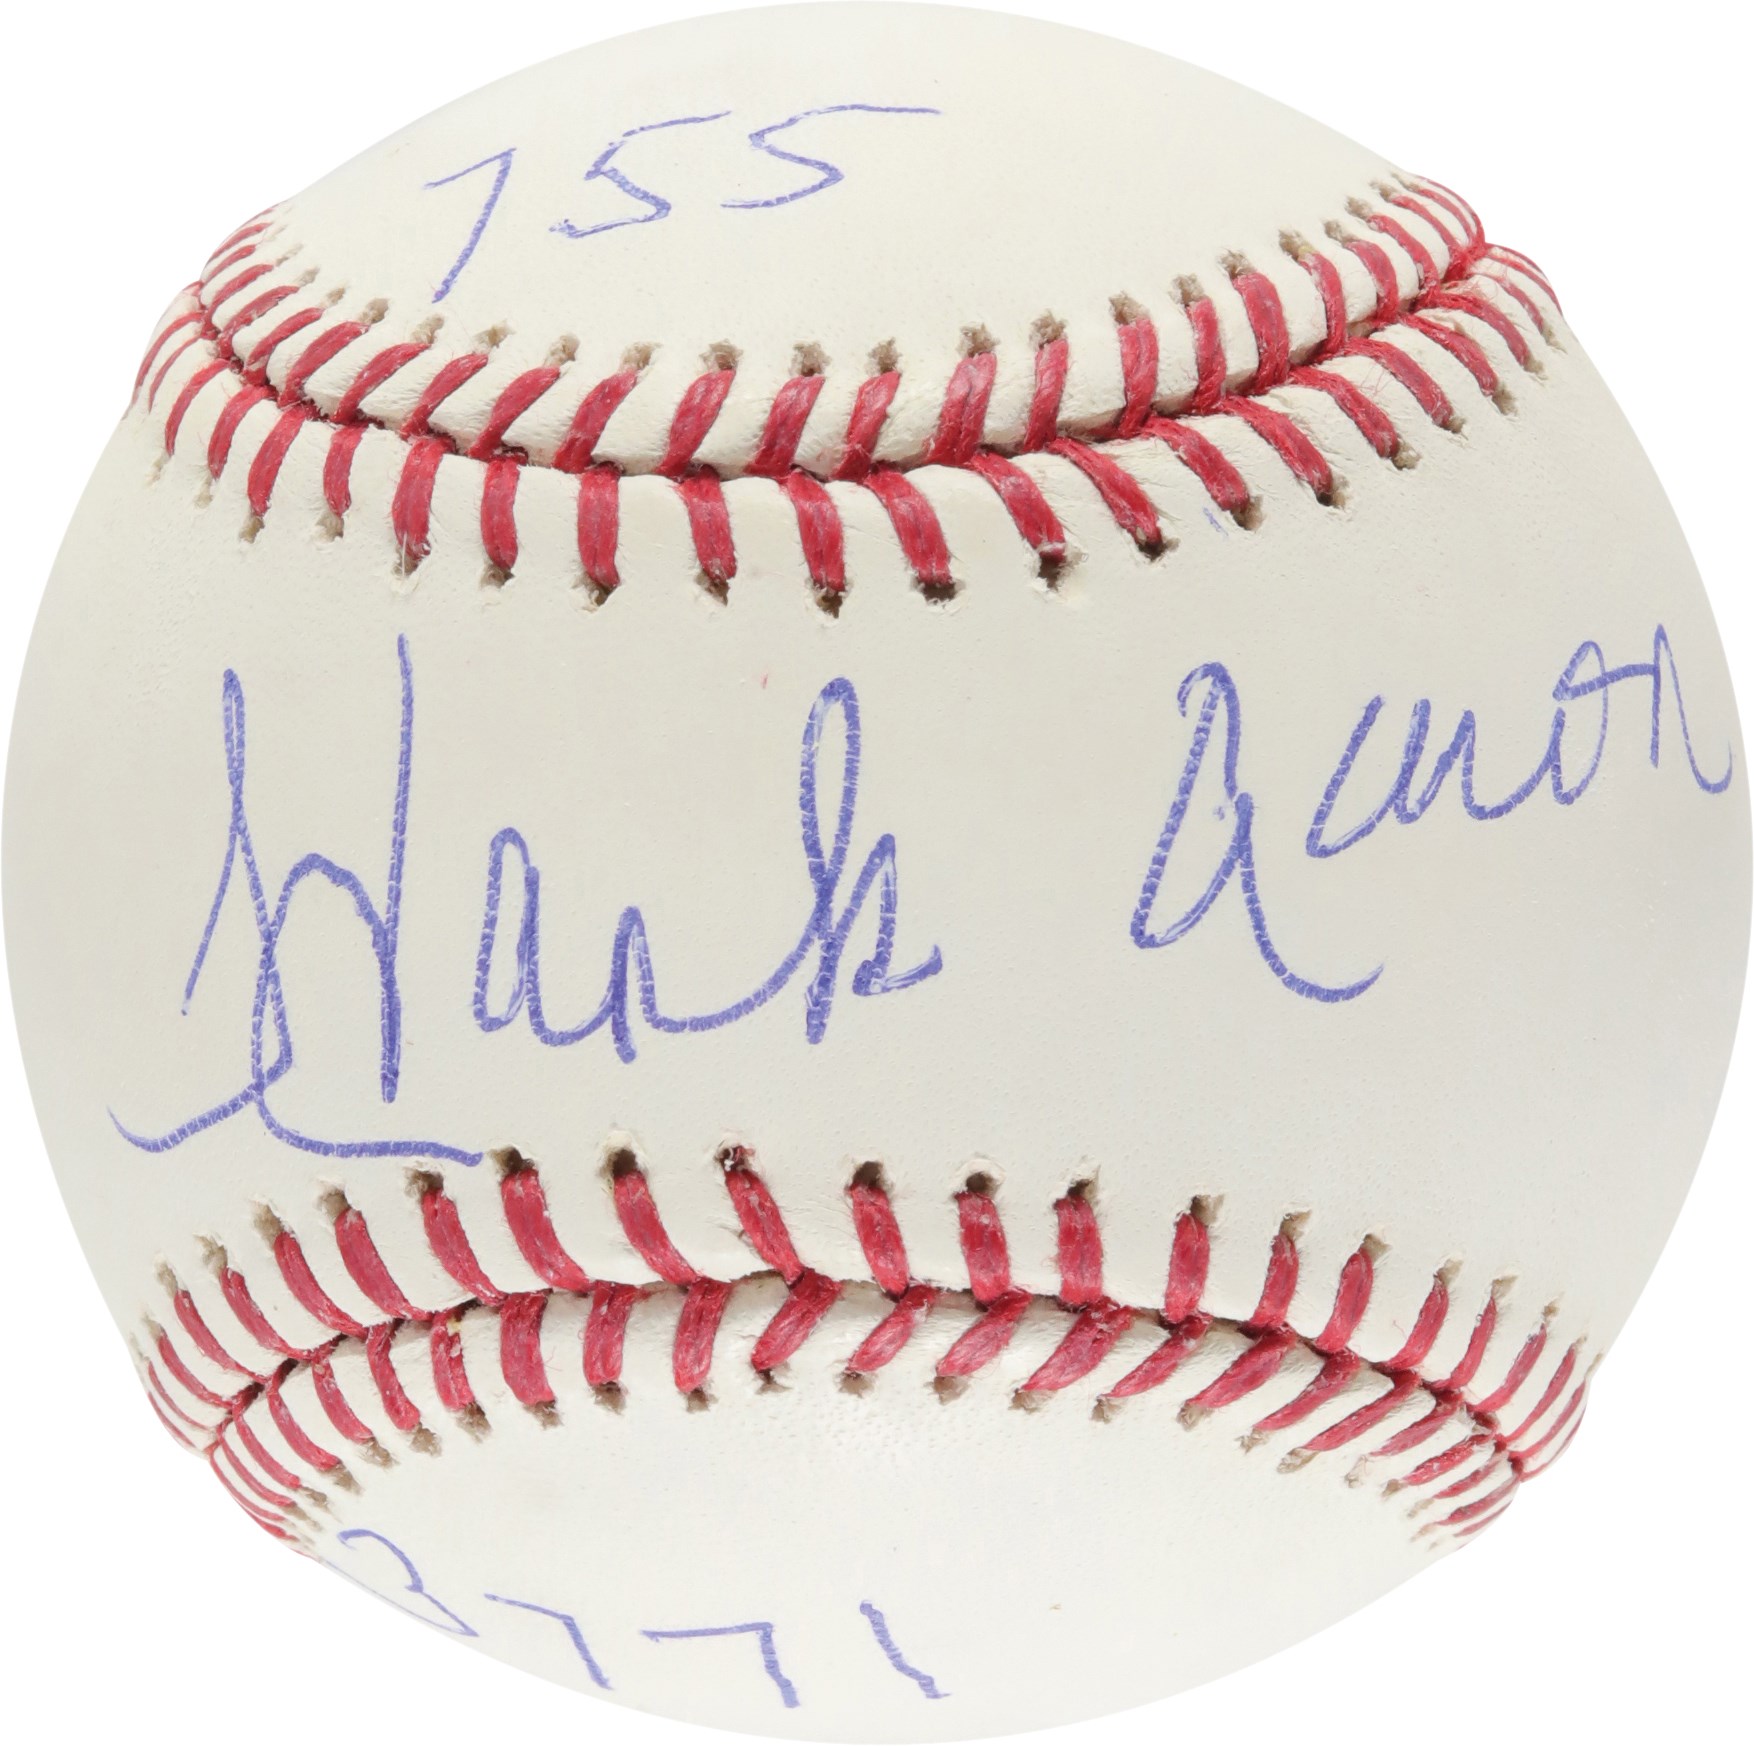 - Hank Aaron "755 & 3,771" Signed Inscribed Stat Baseball (PSA)